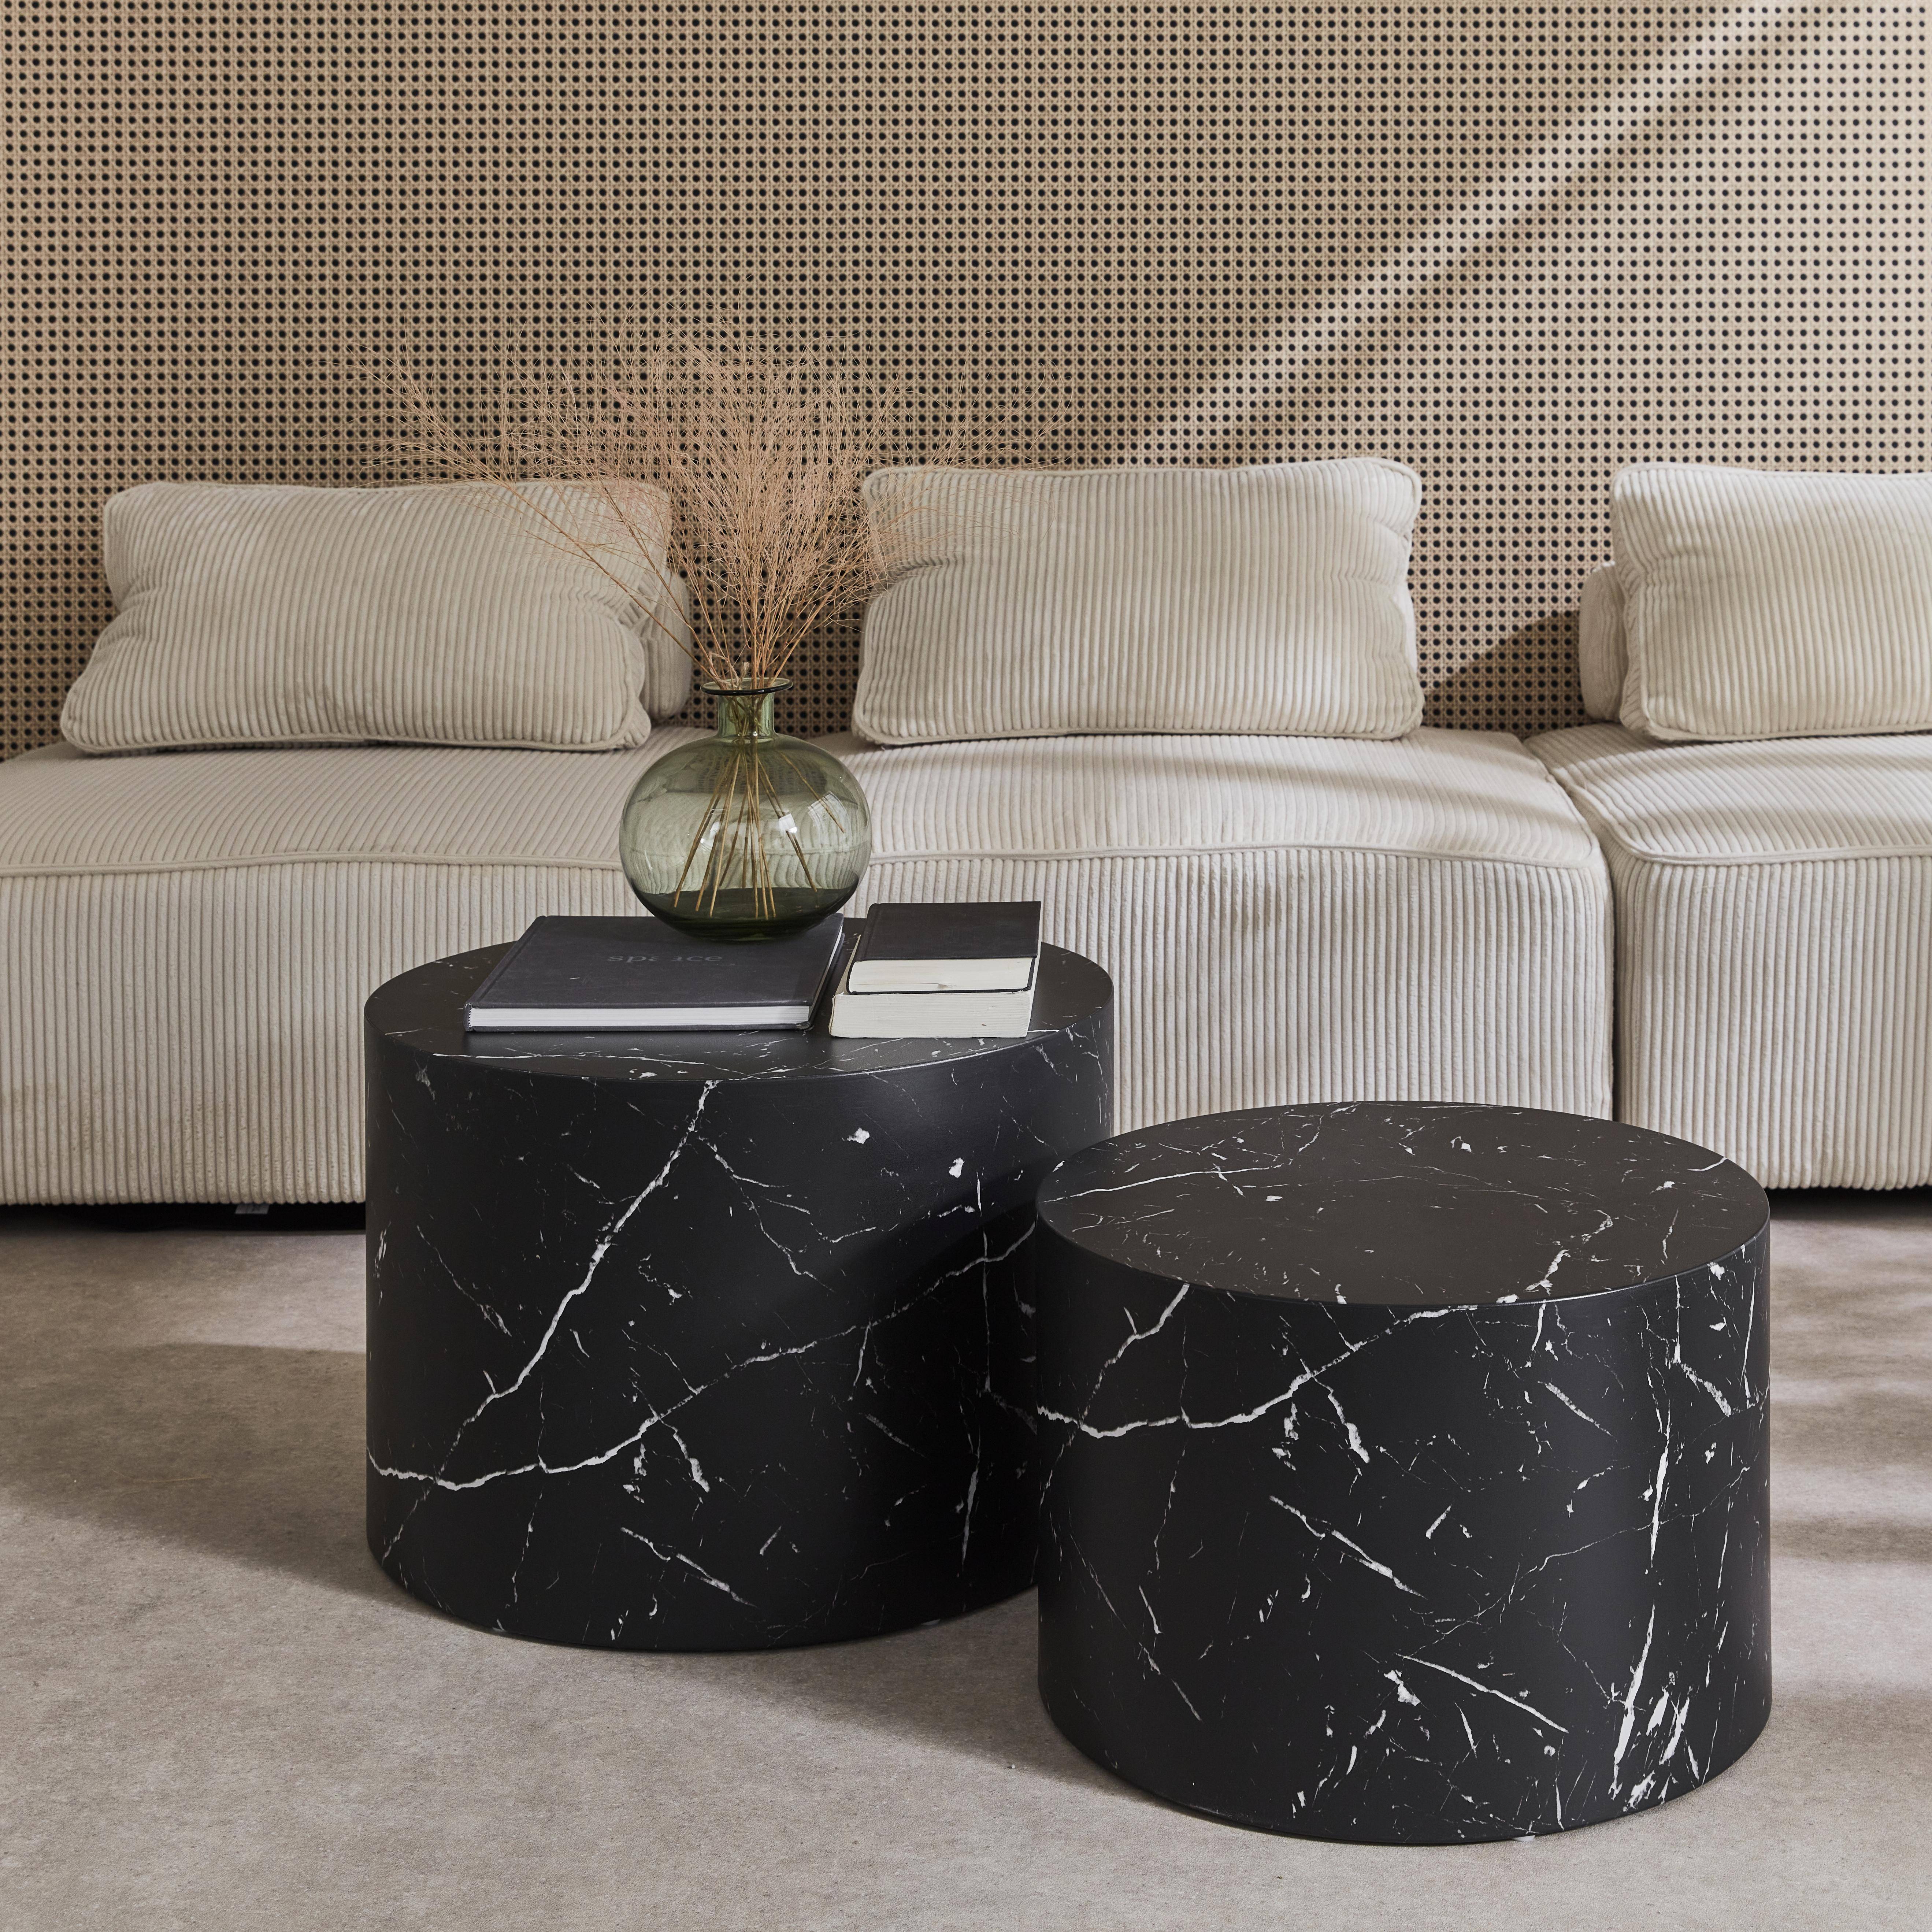 Set of 2 round marble-effect nesting coffee tables, black, Ø58 x H 40cm / Ø50 x H 33cm,sweeek,Photo1